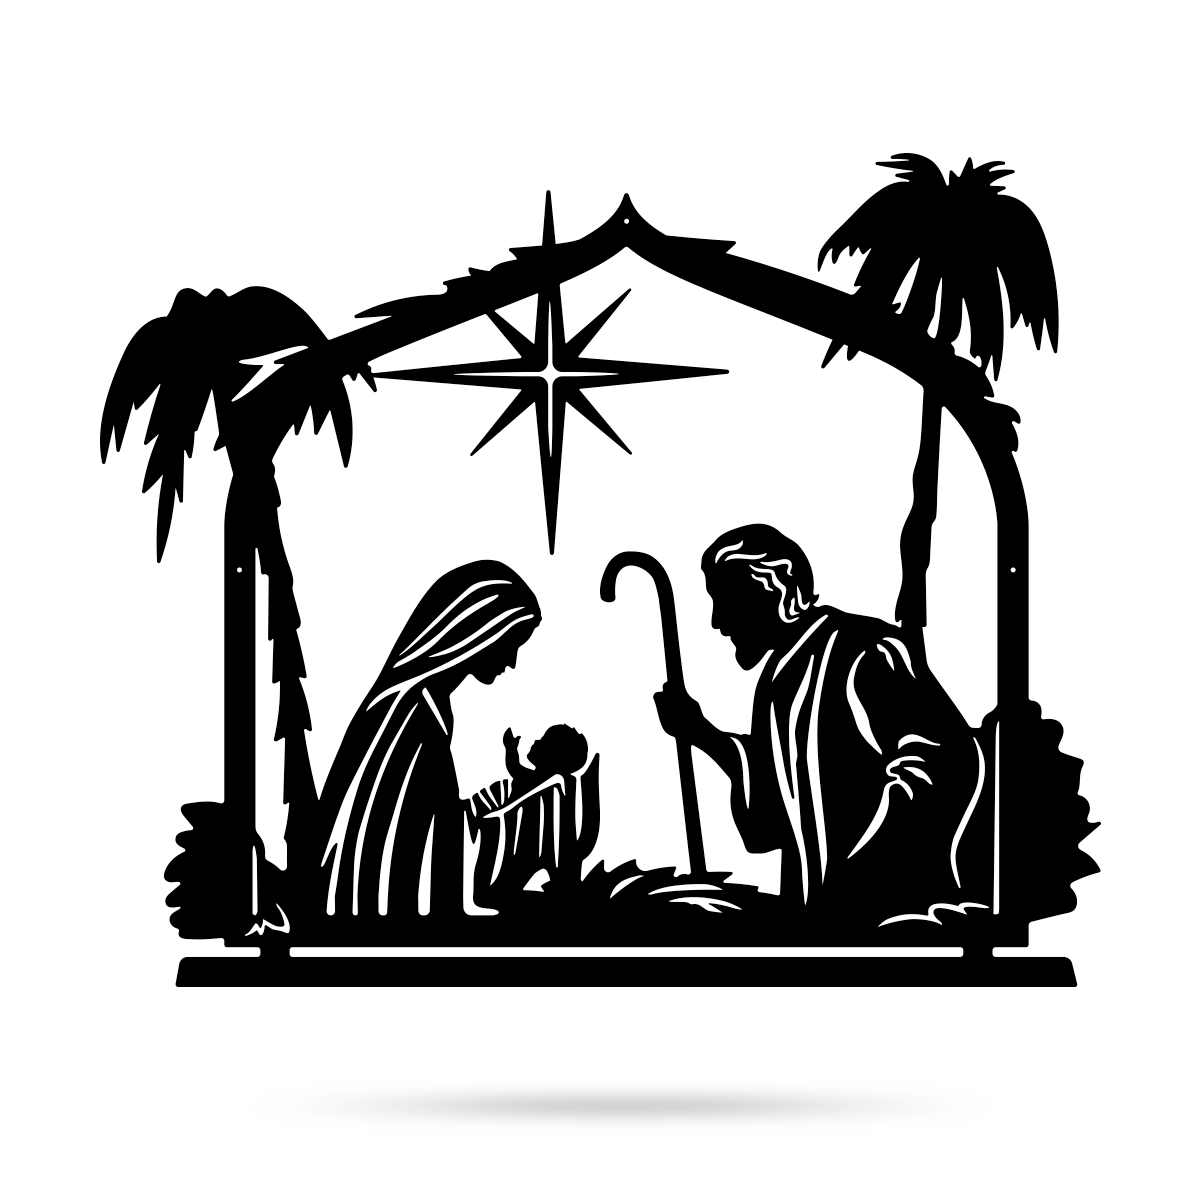 merry christmas black and white nativity